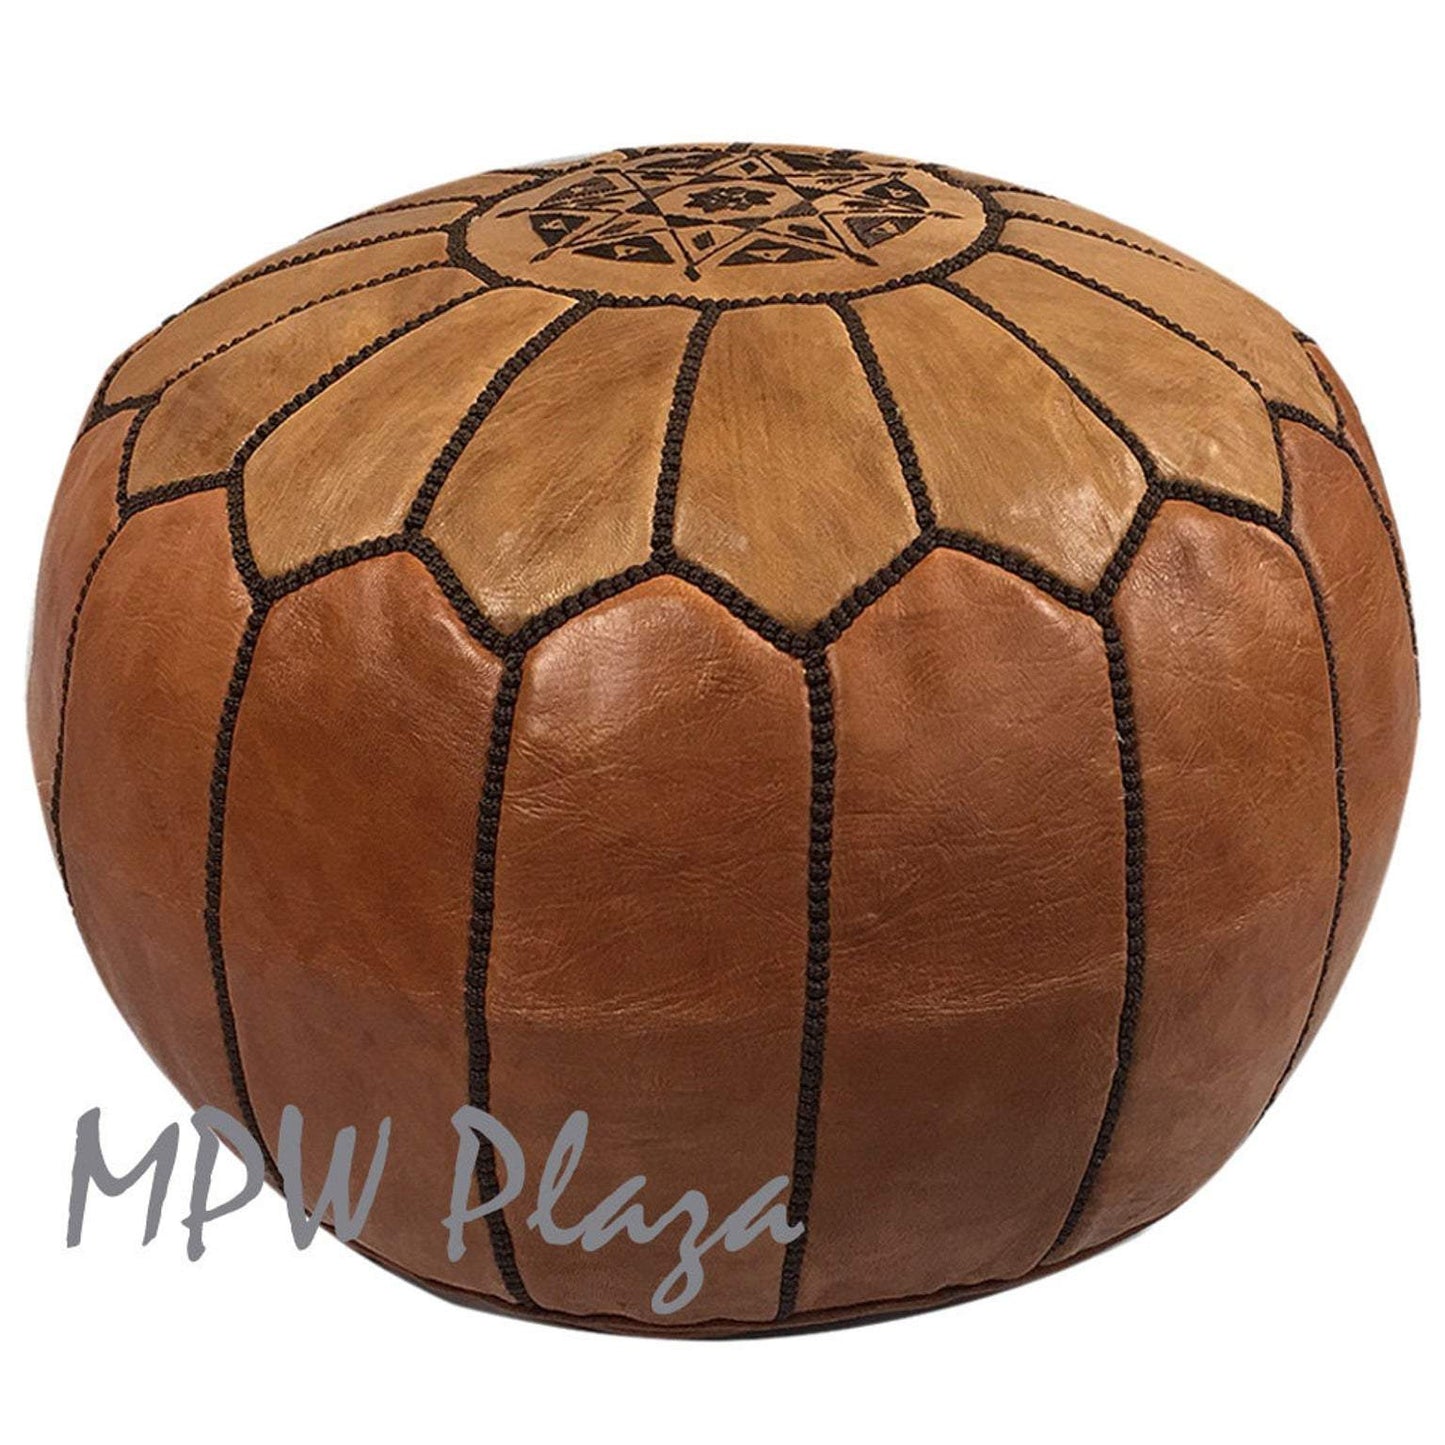 MPW Plaza® Moroccan Pouf, Two Tone Light Tan/Tan tone w dark embroidery, 14" x 20" Topshelf Moroccan Leather,  couture ottoman (Cover) freeshipping - MPW Plaza®